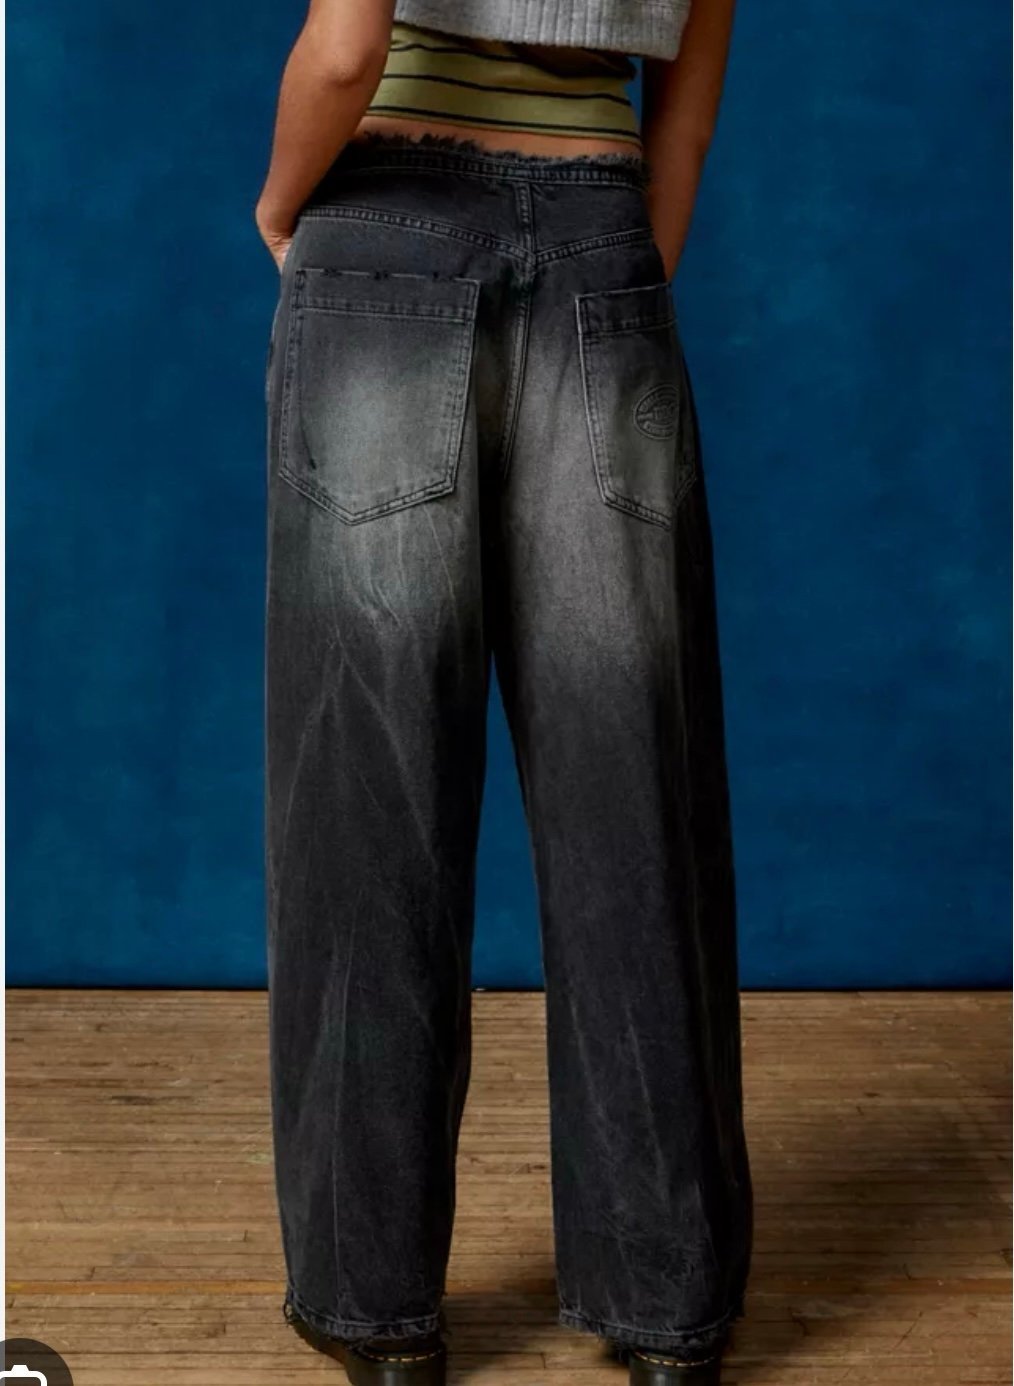 Simple Urban Outfitters BDG Jaya Boyfriend Baggy Jeans Jyjt5Si2R Factory Price